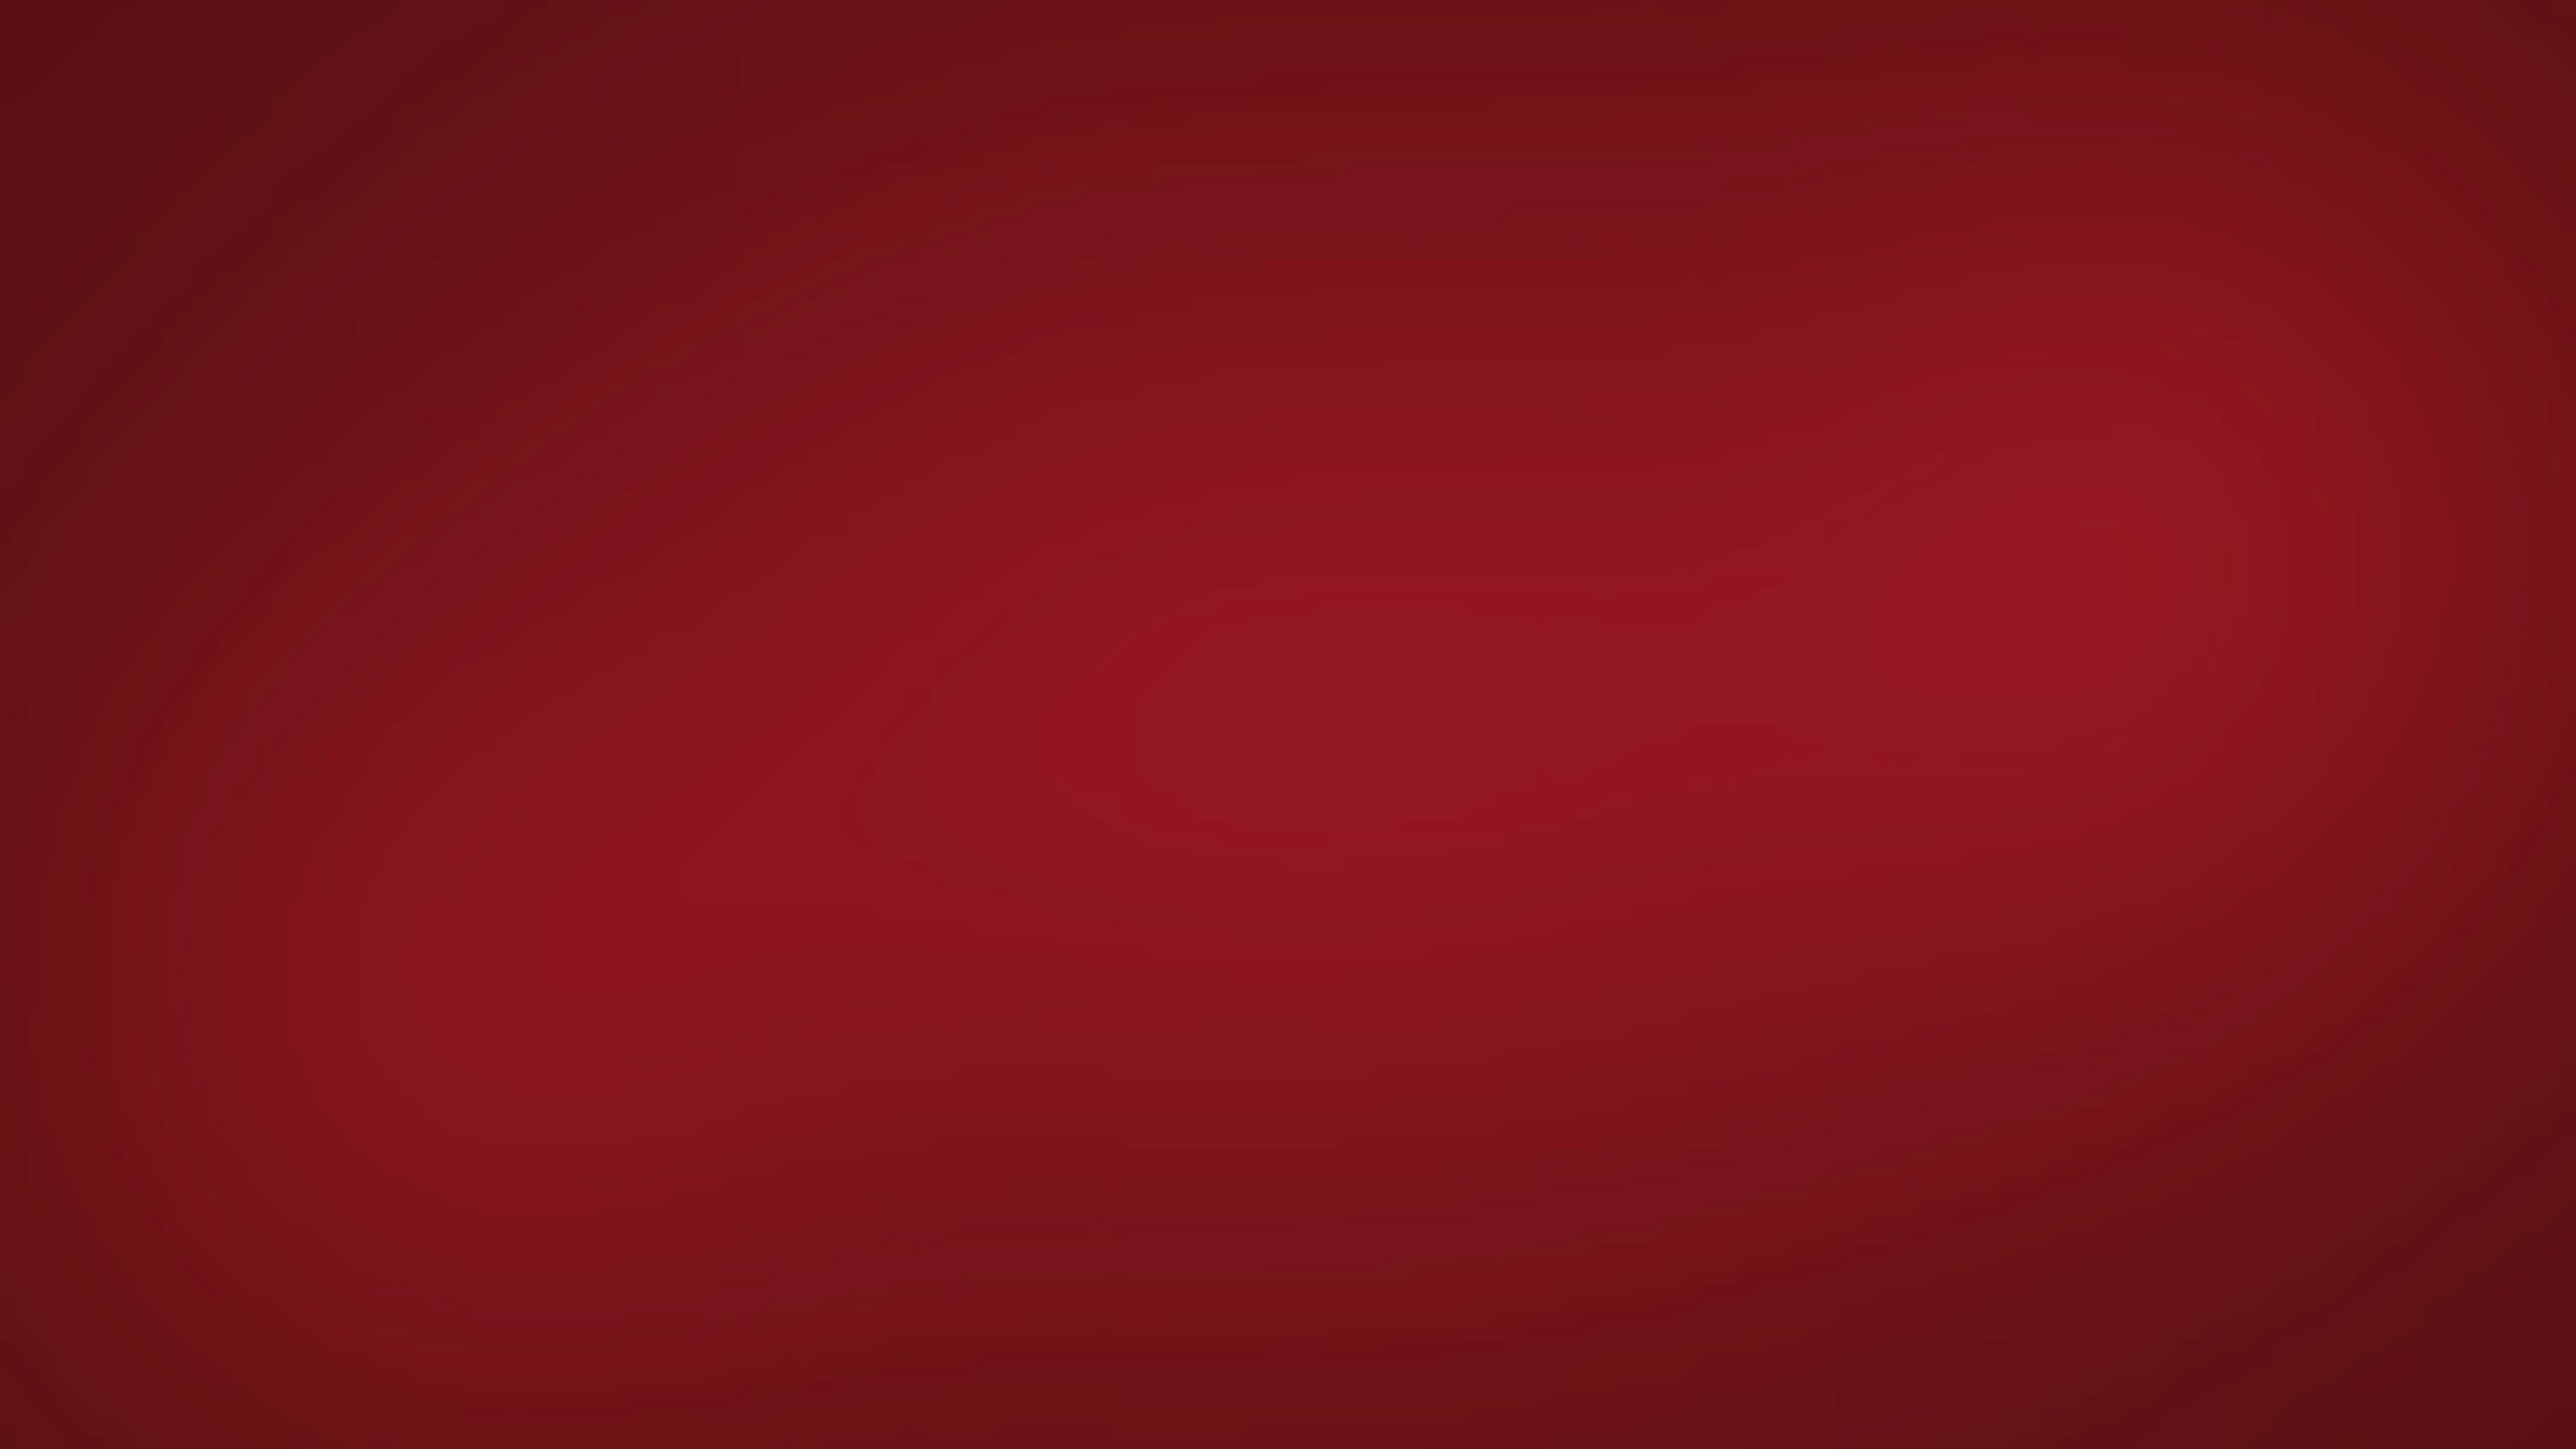 Red Burgundy Radial Gradient Background